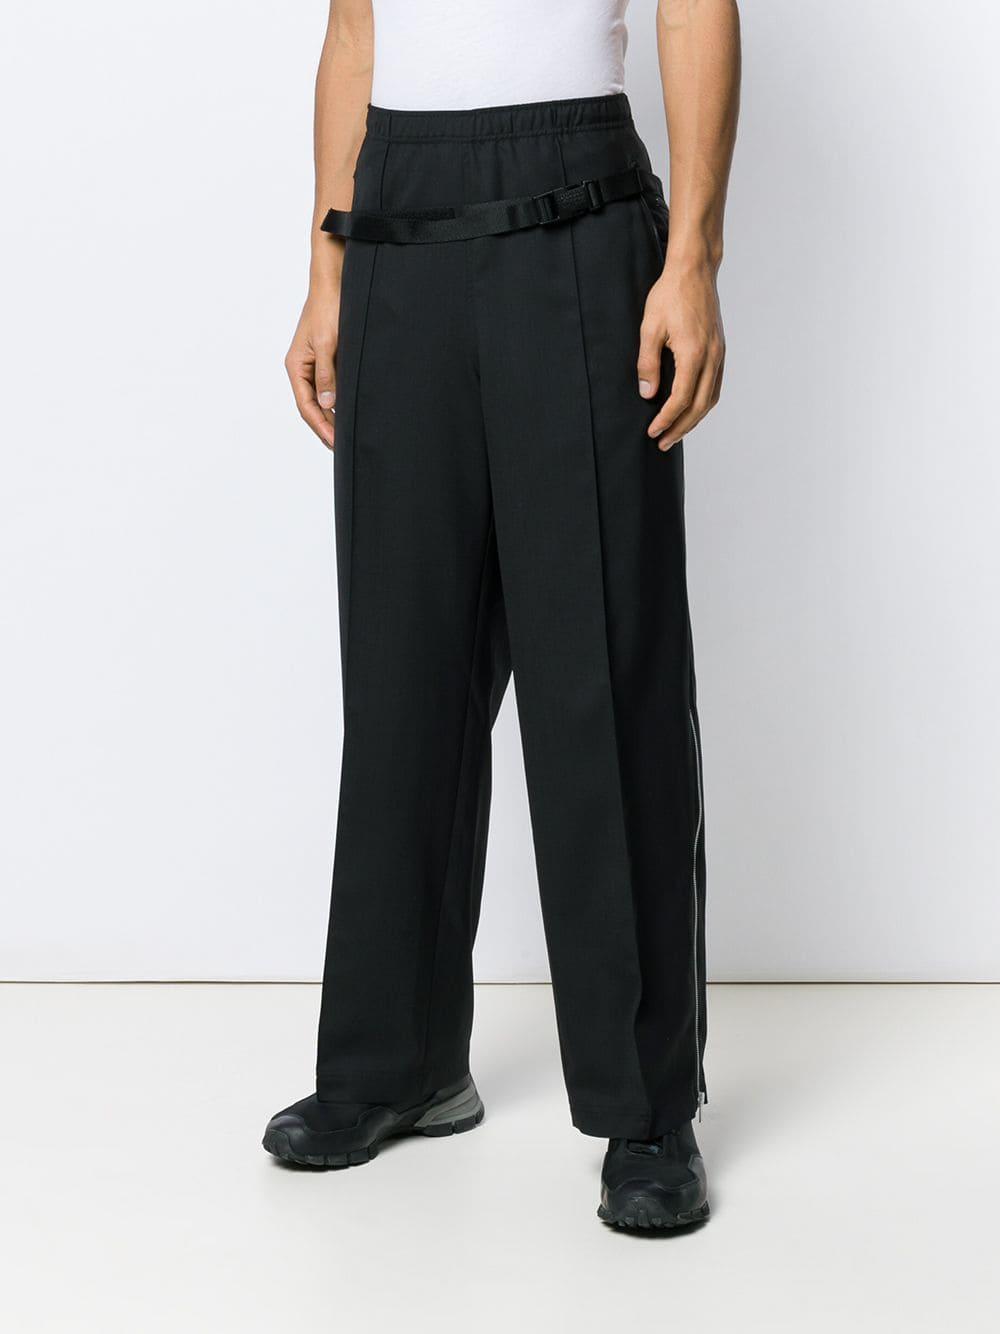 Maison Margiela Belted Straight Leg Trousers in Black for Men - Lyst